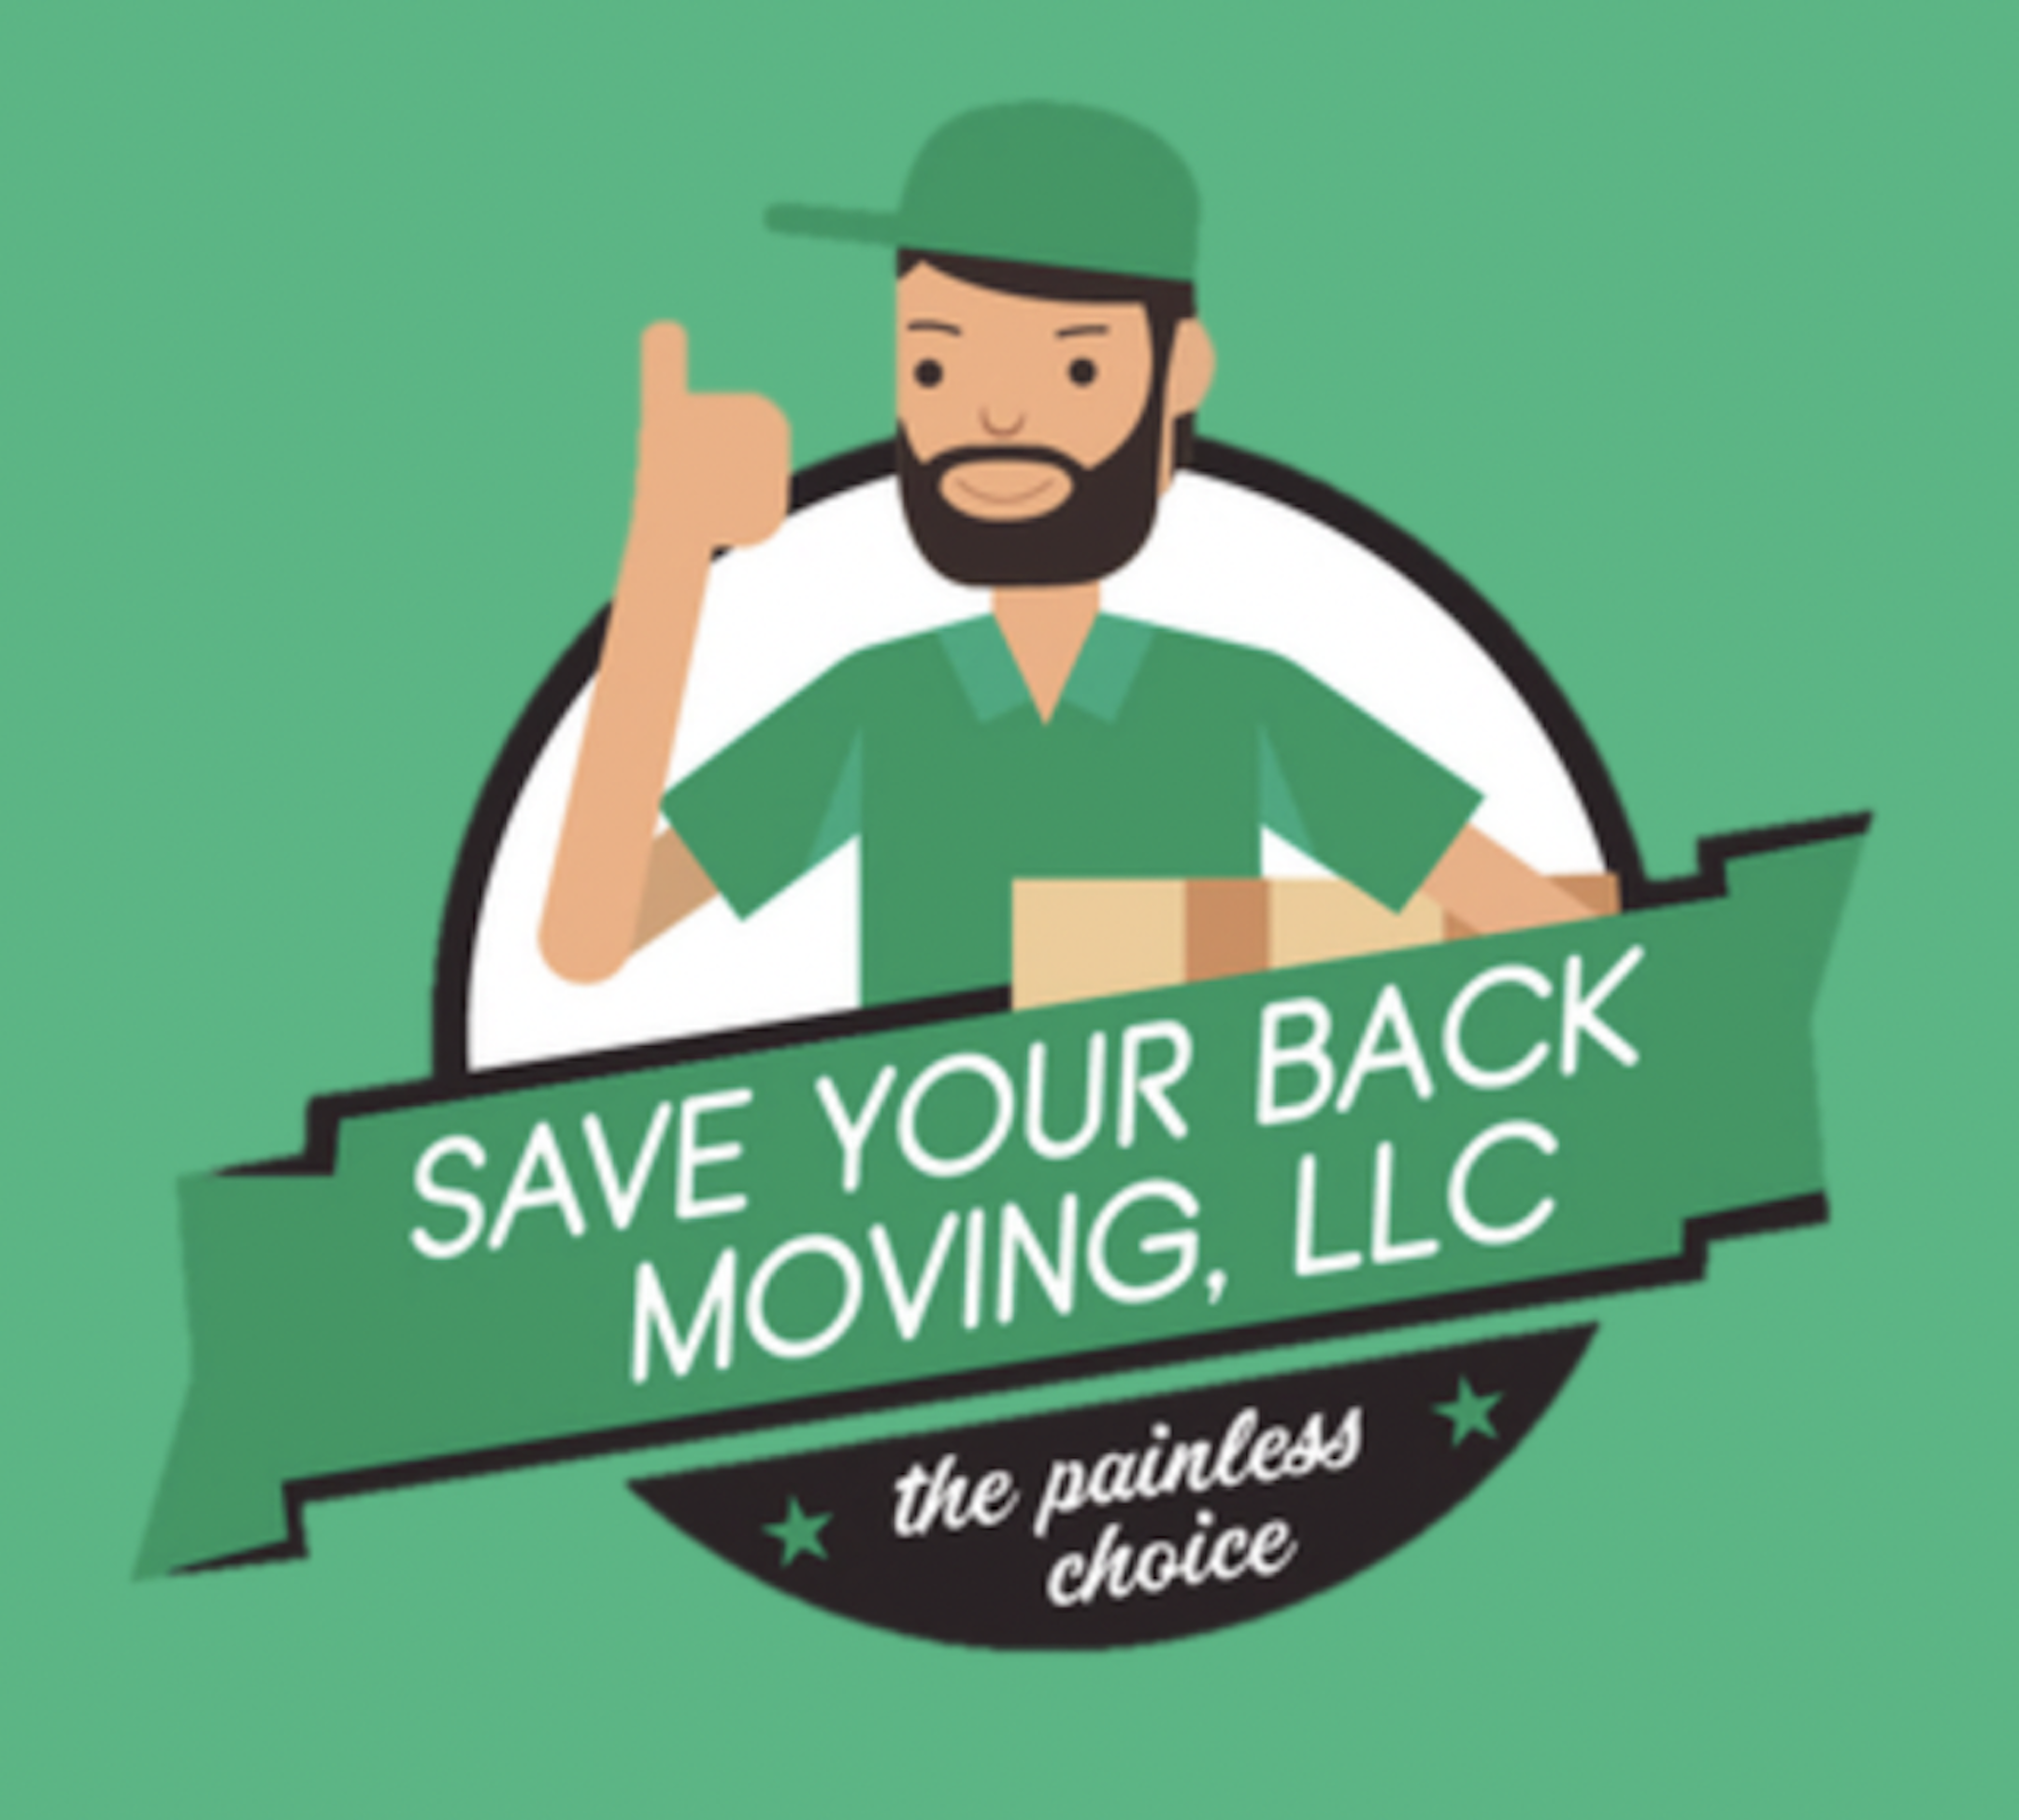 Save Your Back Moving, LLC Logo